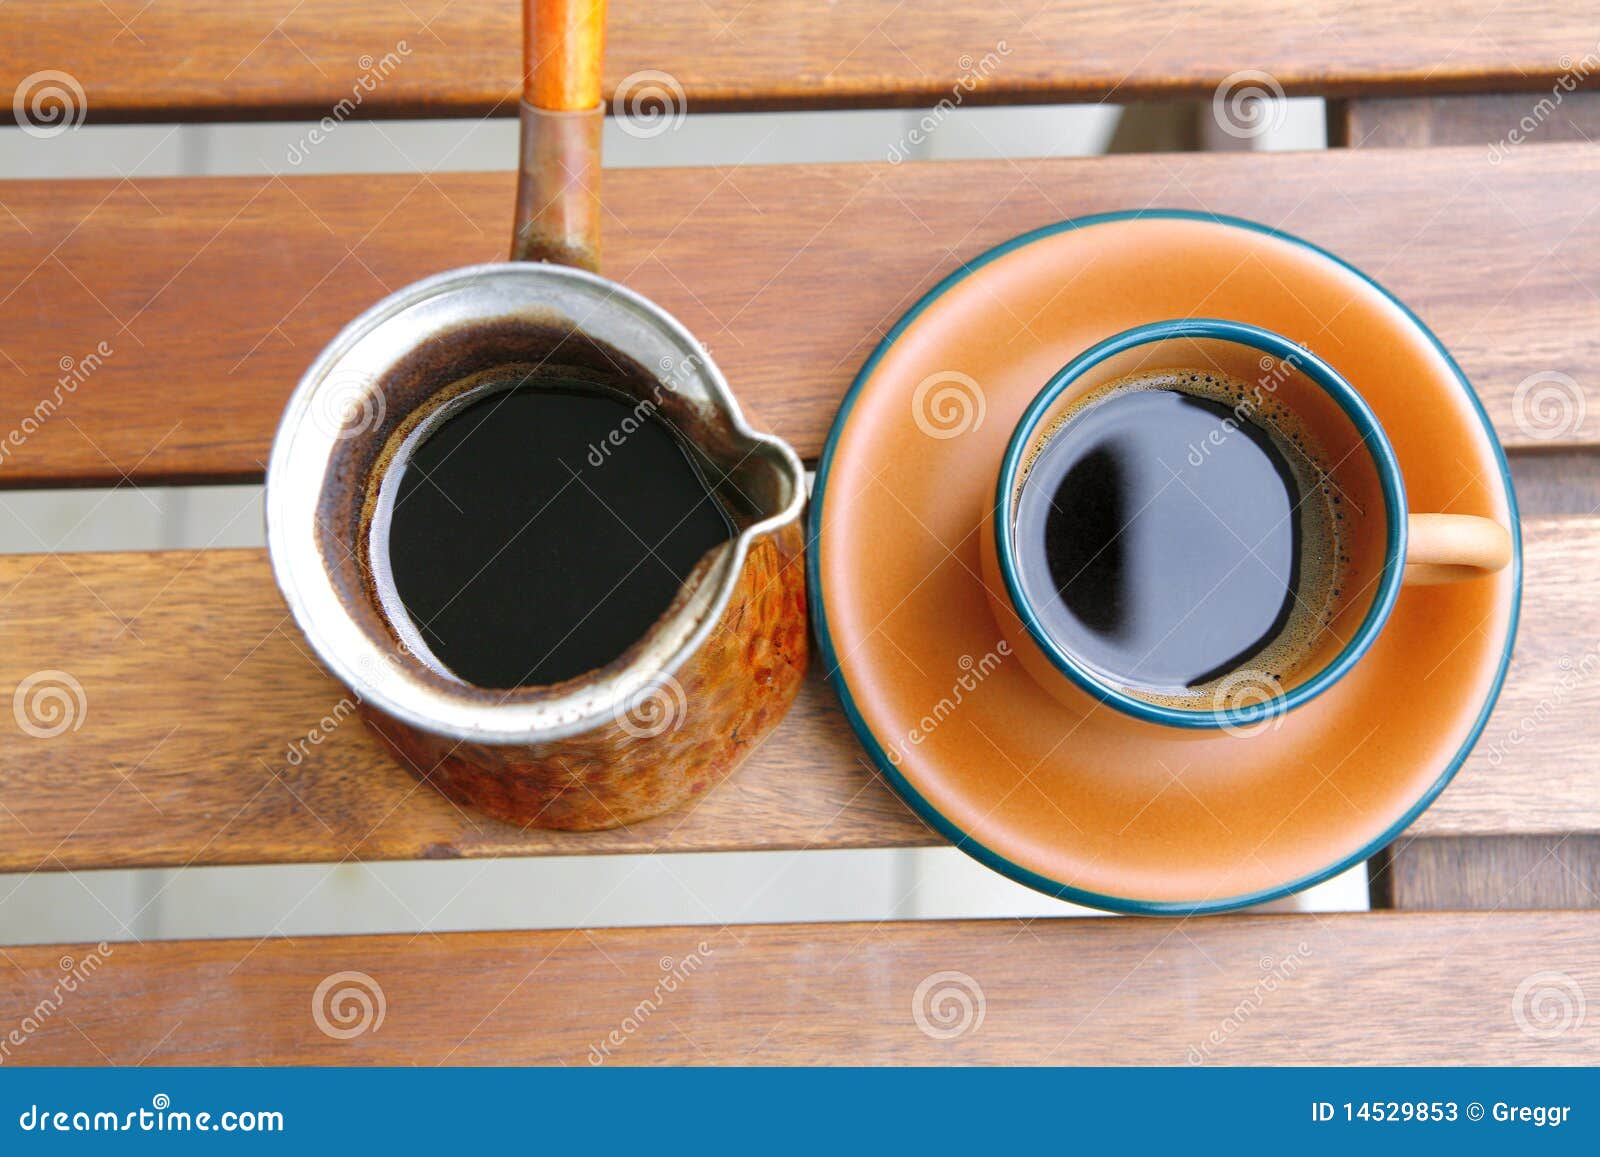 black coffee cup